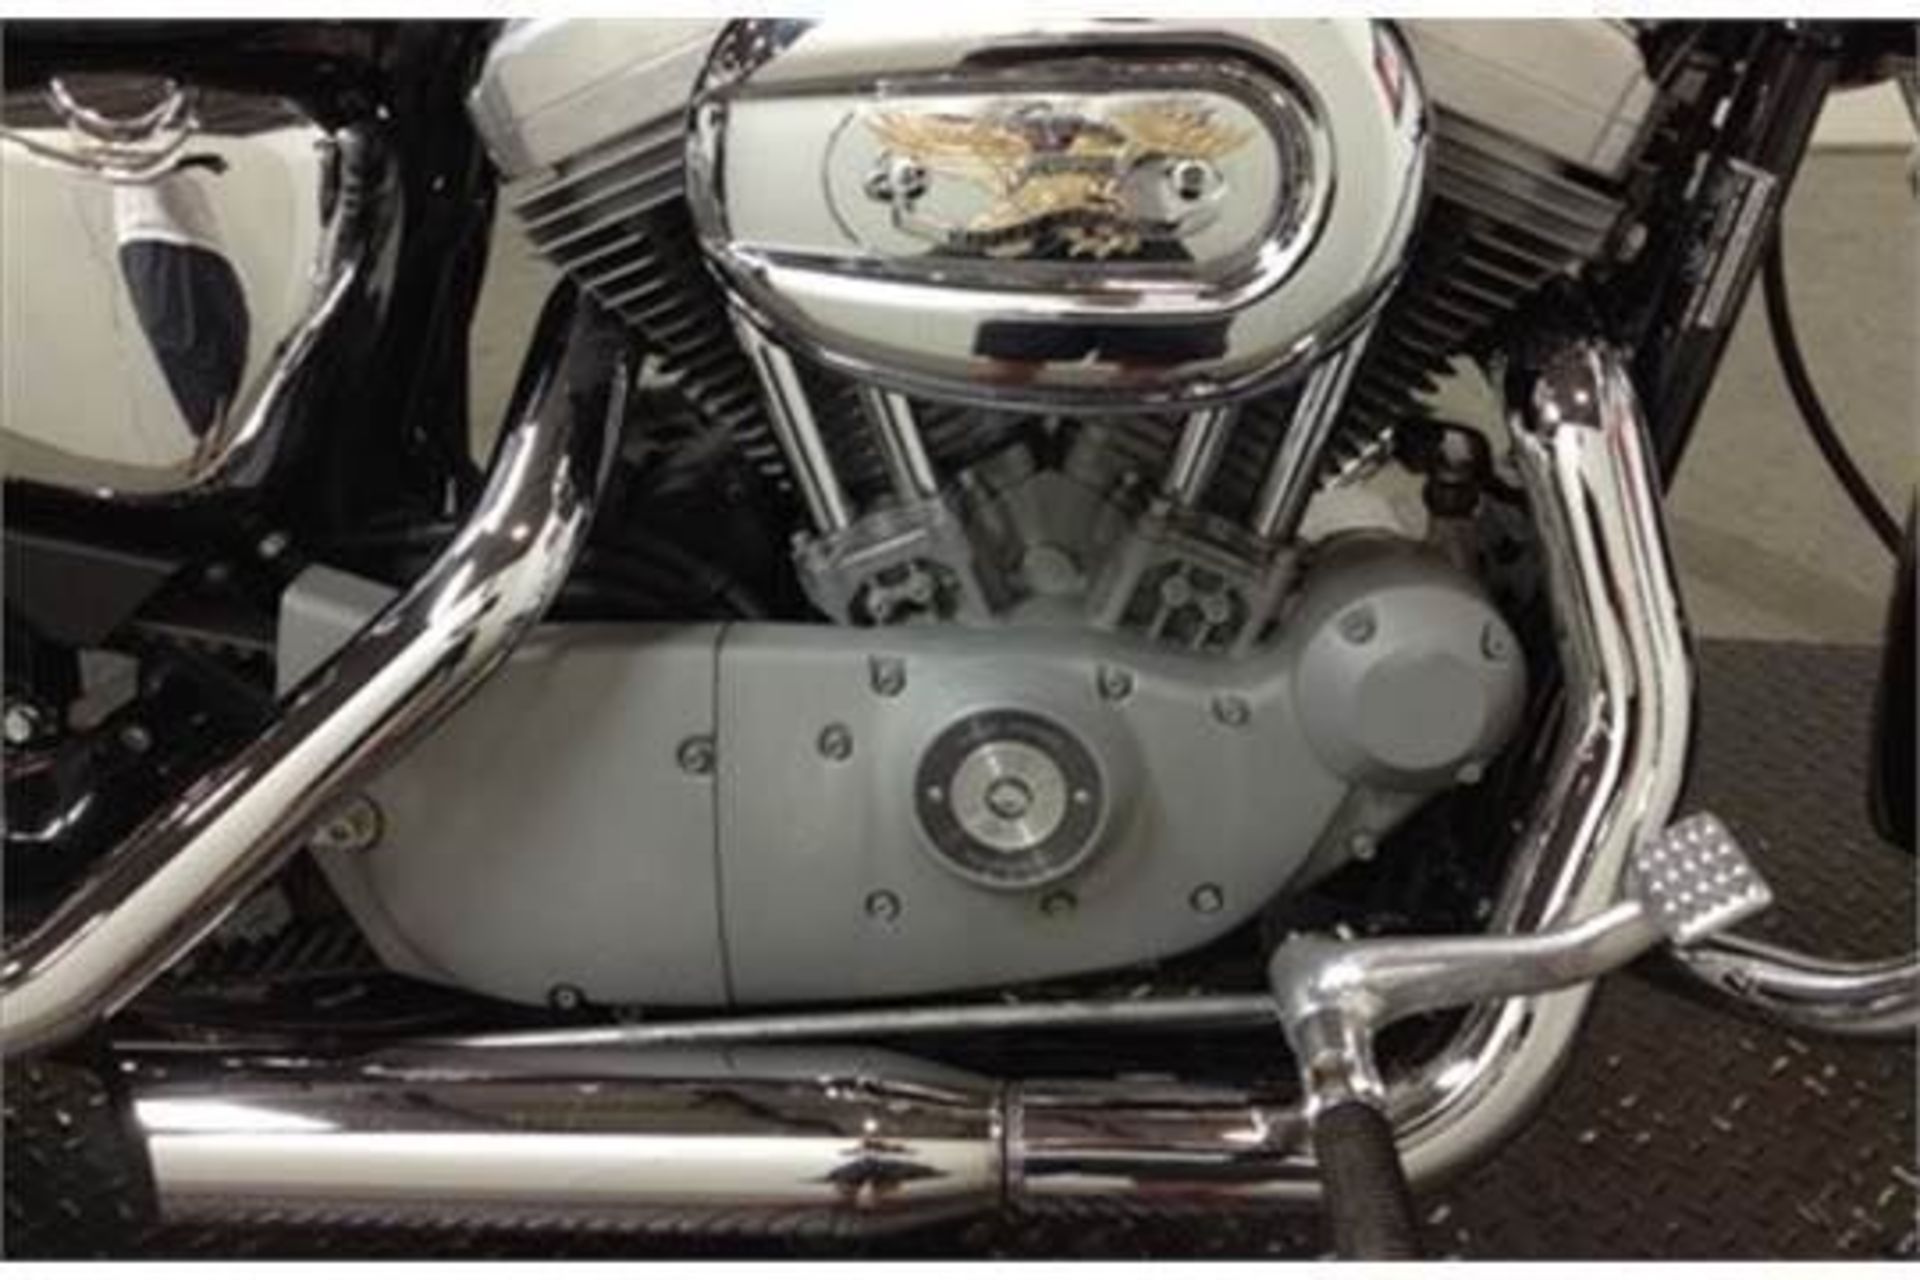 2005 Harley Davidson XL883C - Image 6 of 8